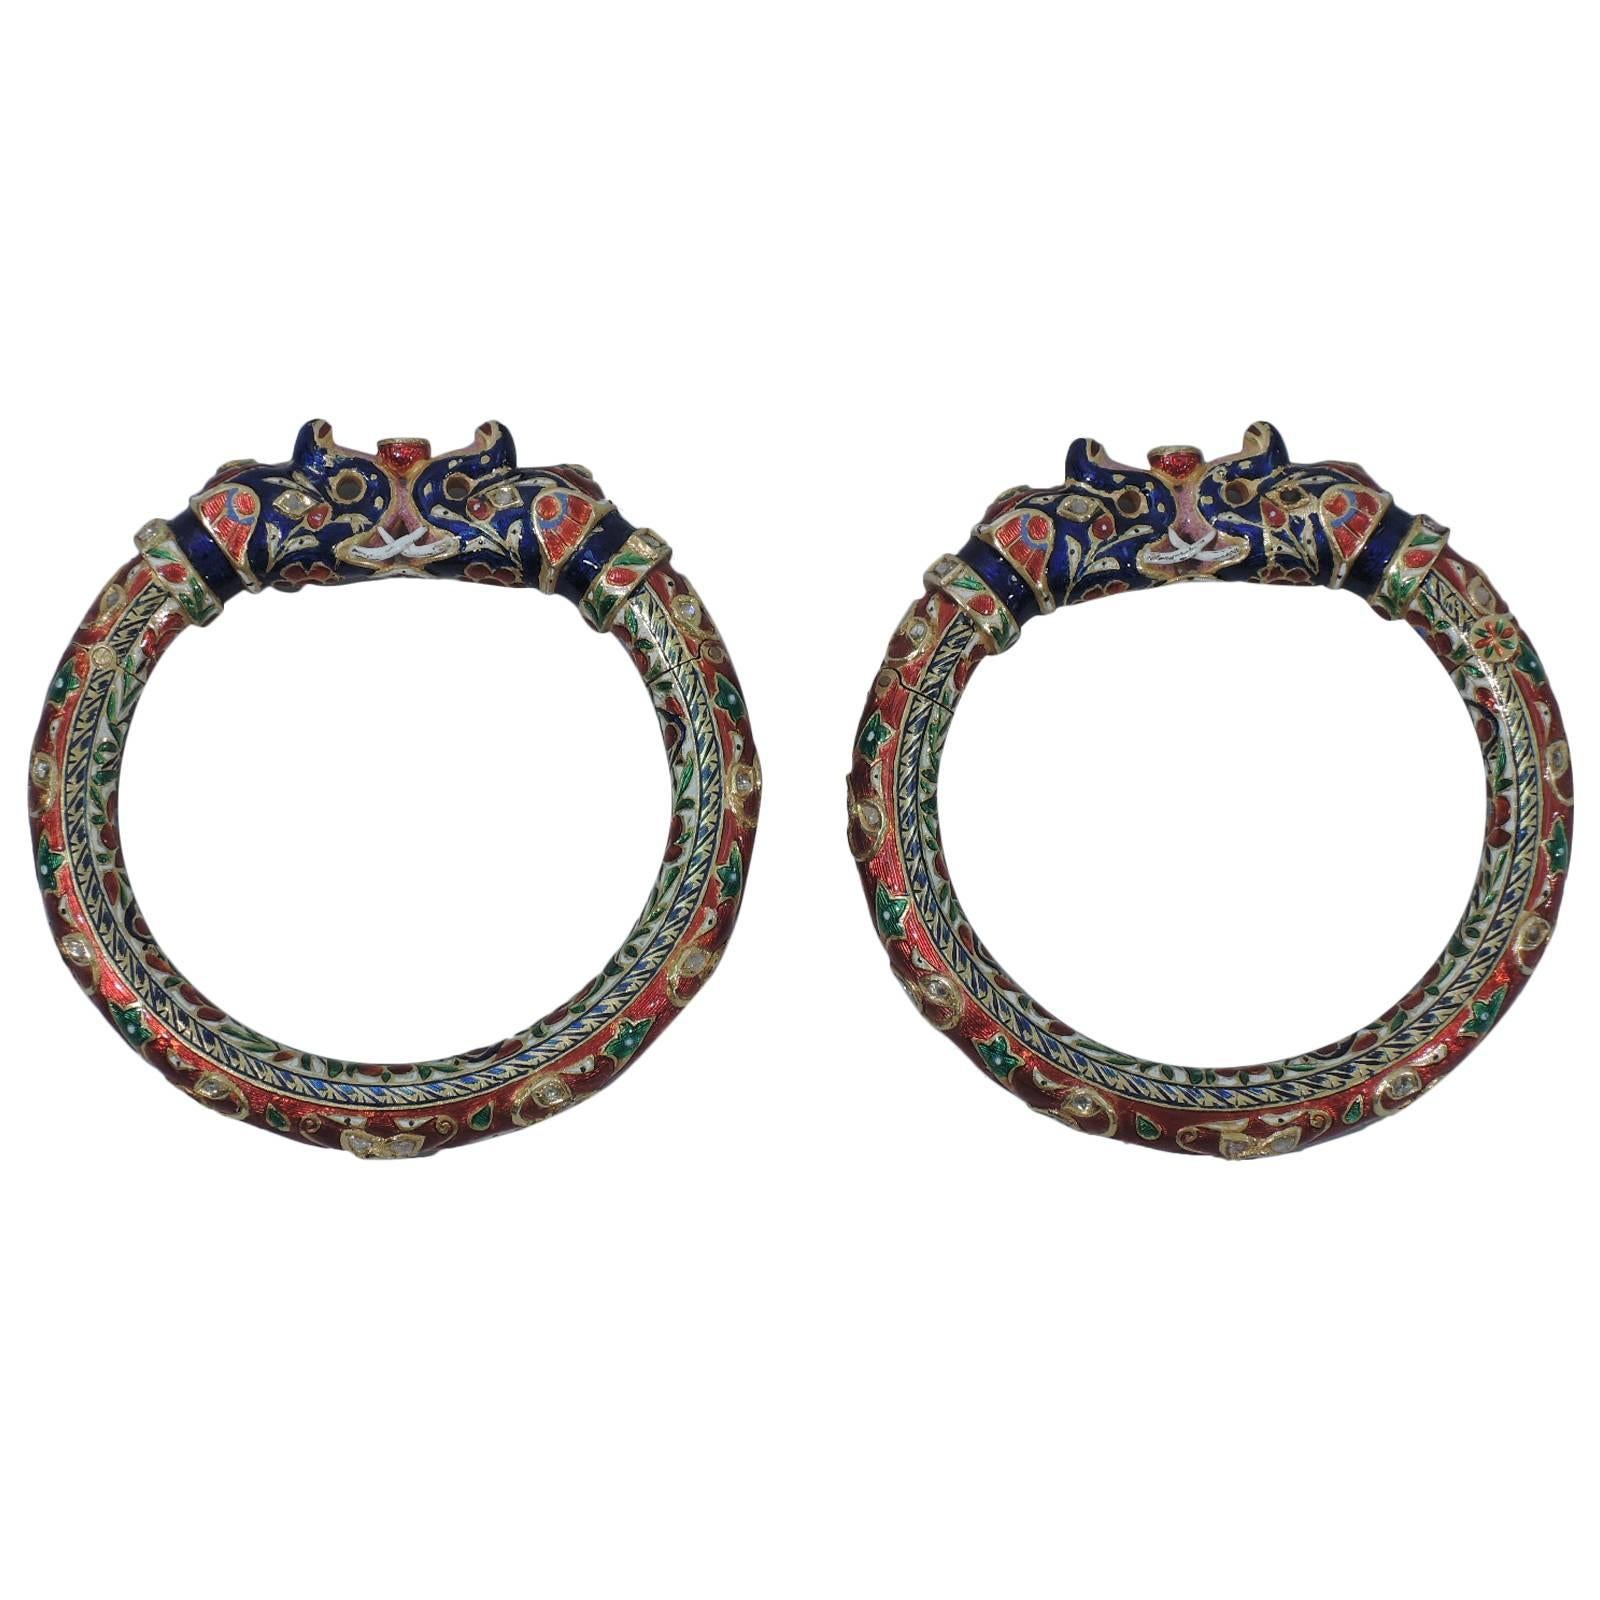 Pair of Enamel Gold Jaipur Indian Bangle Bracelets